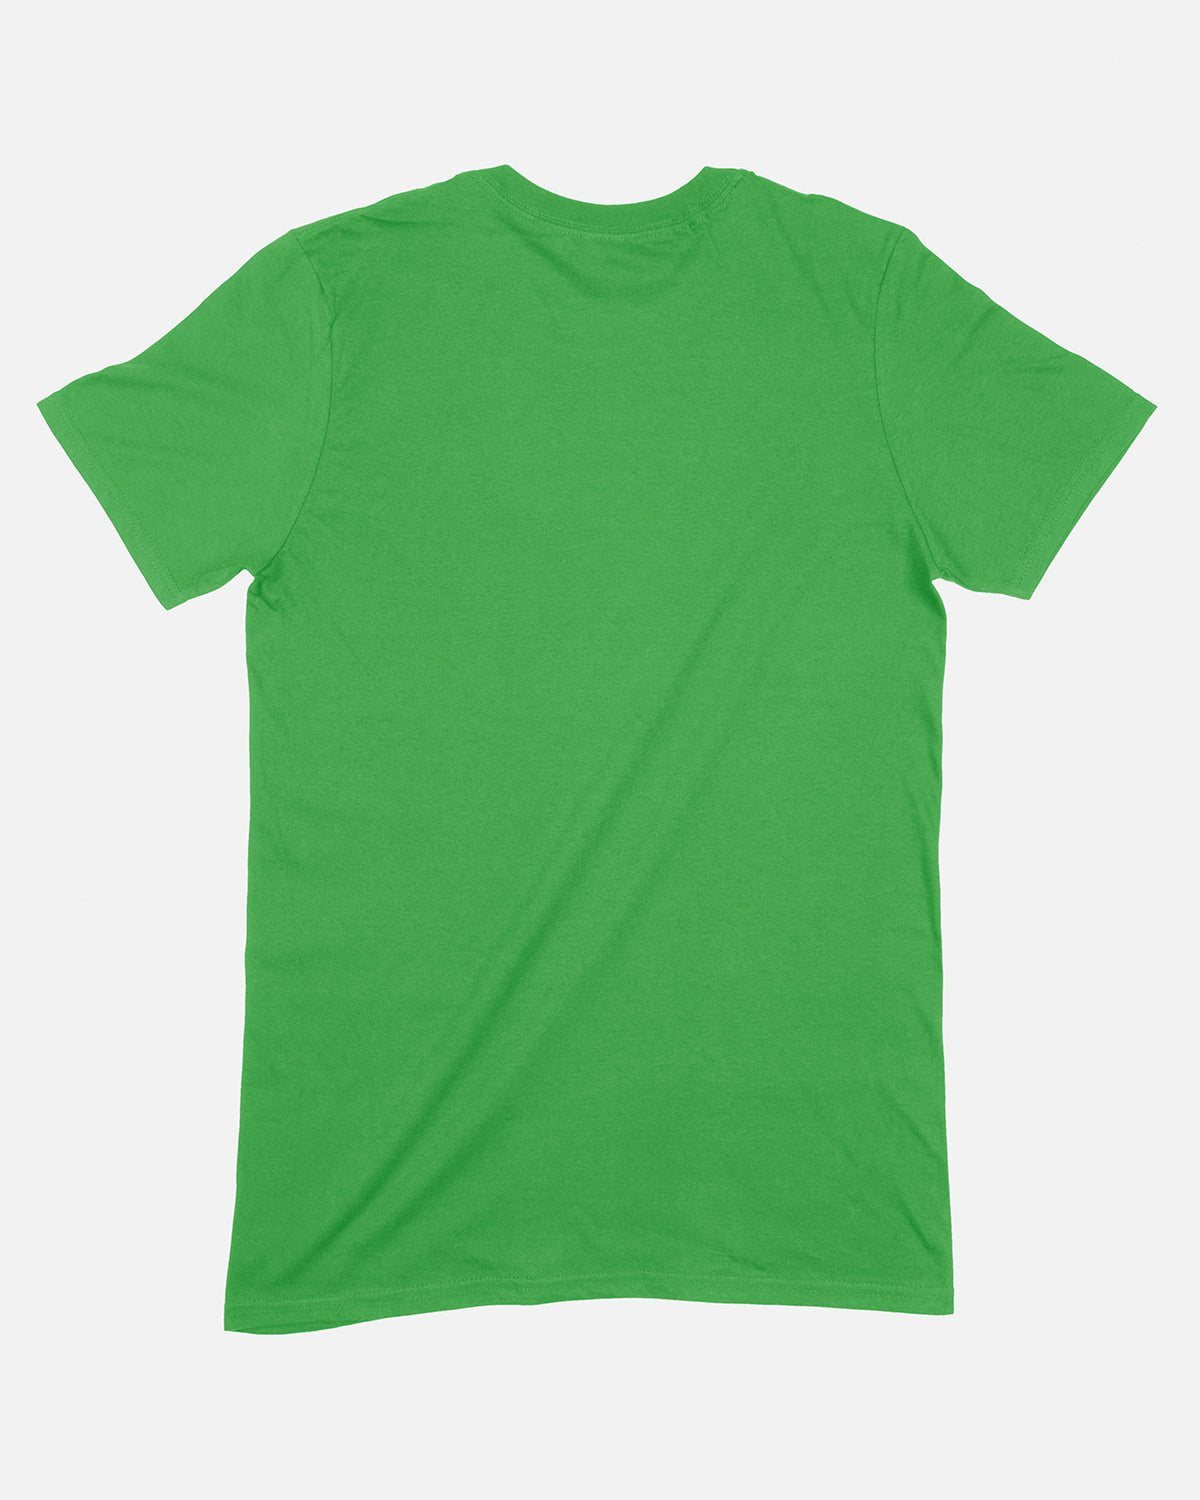 NFFC Classic Green T-Shirt - Nottingham Forest FC